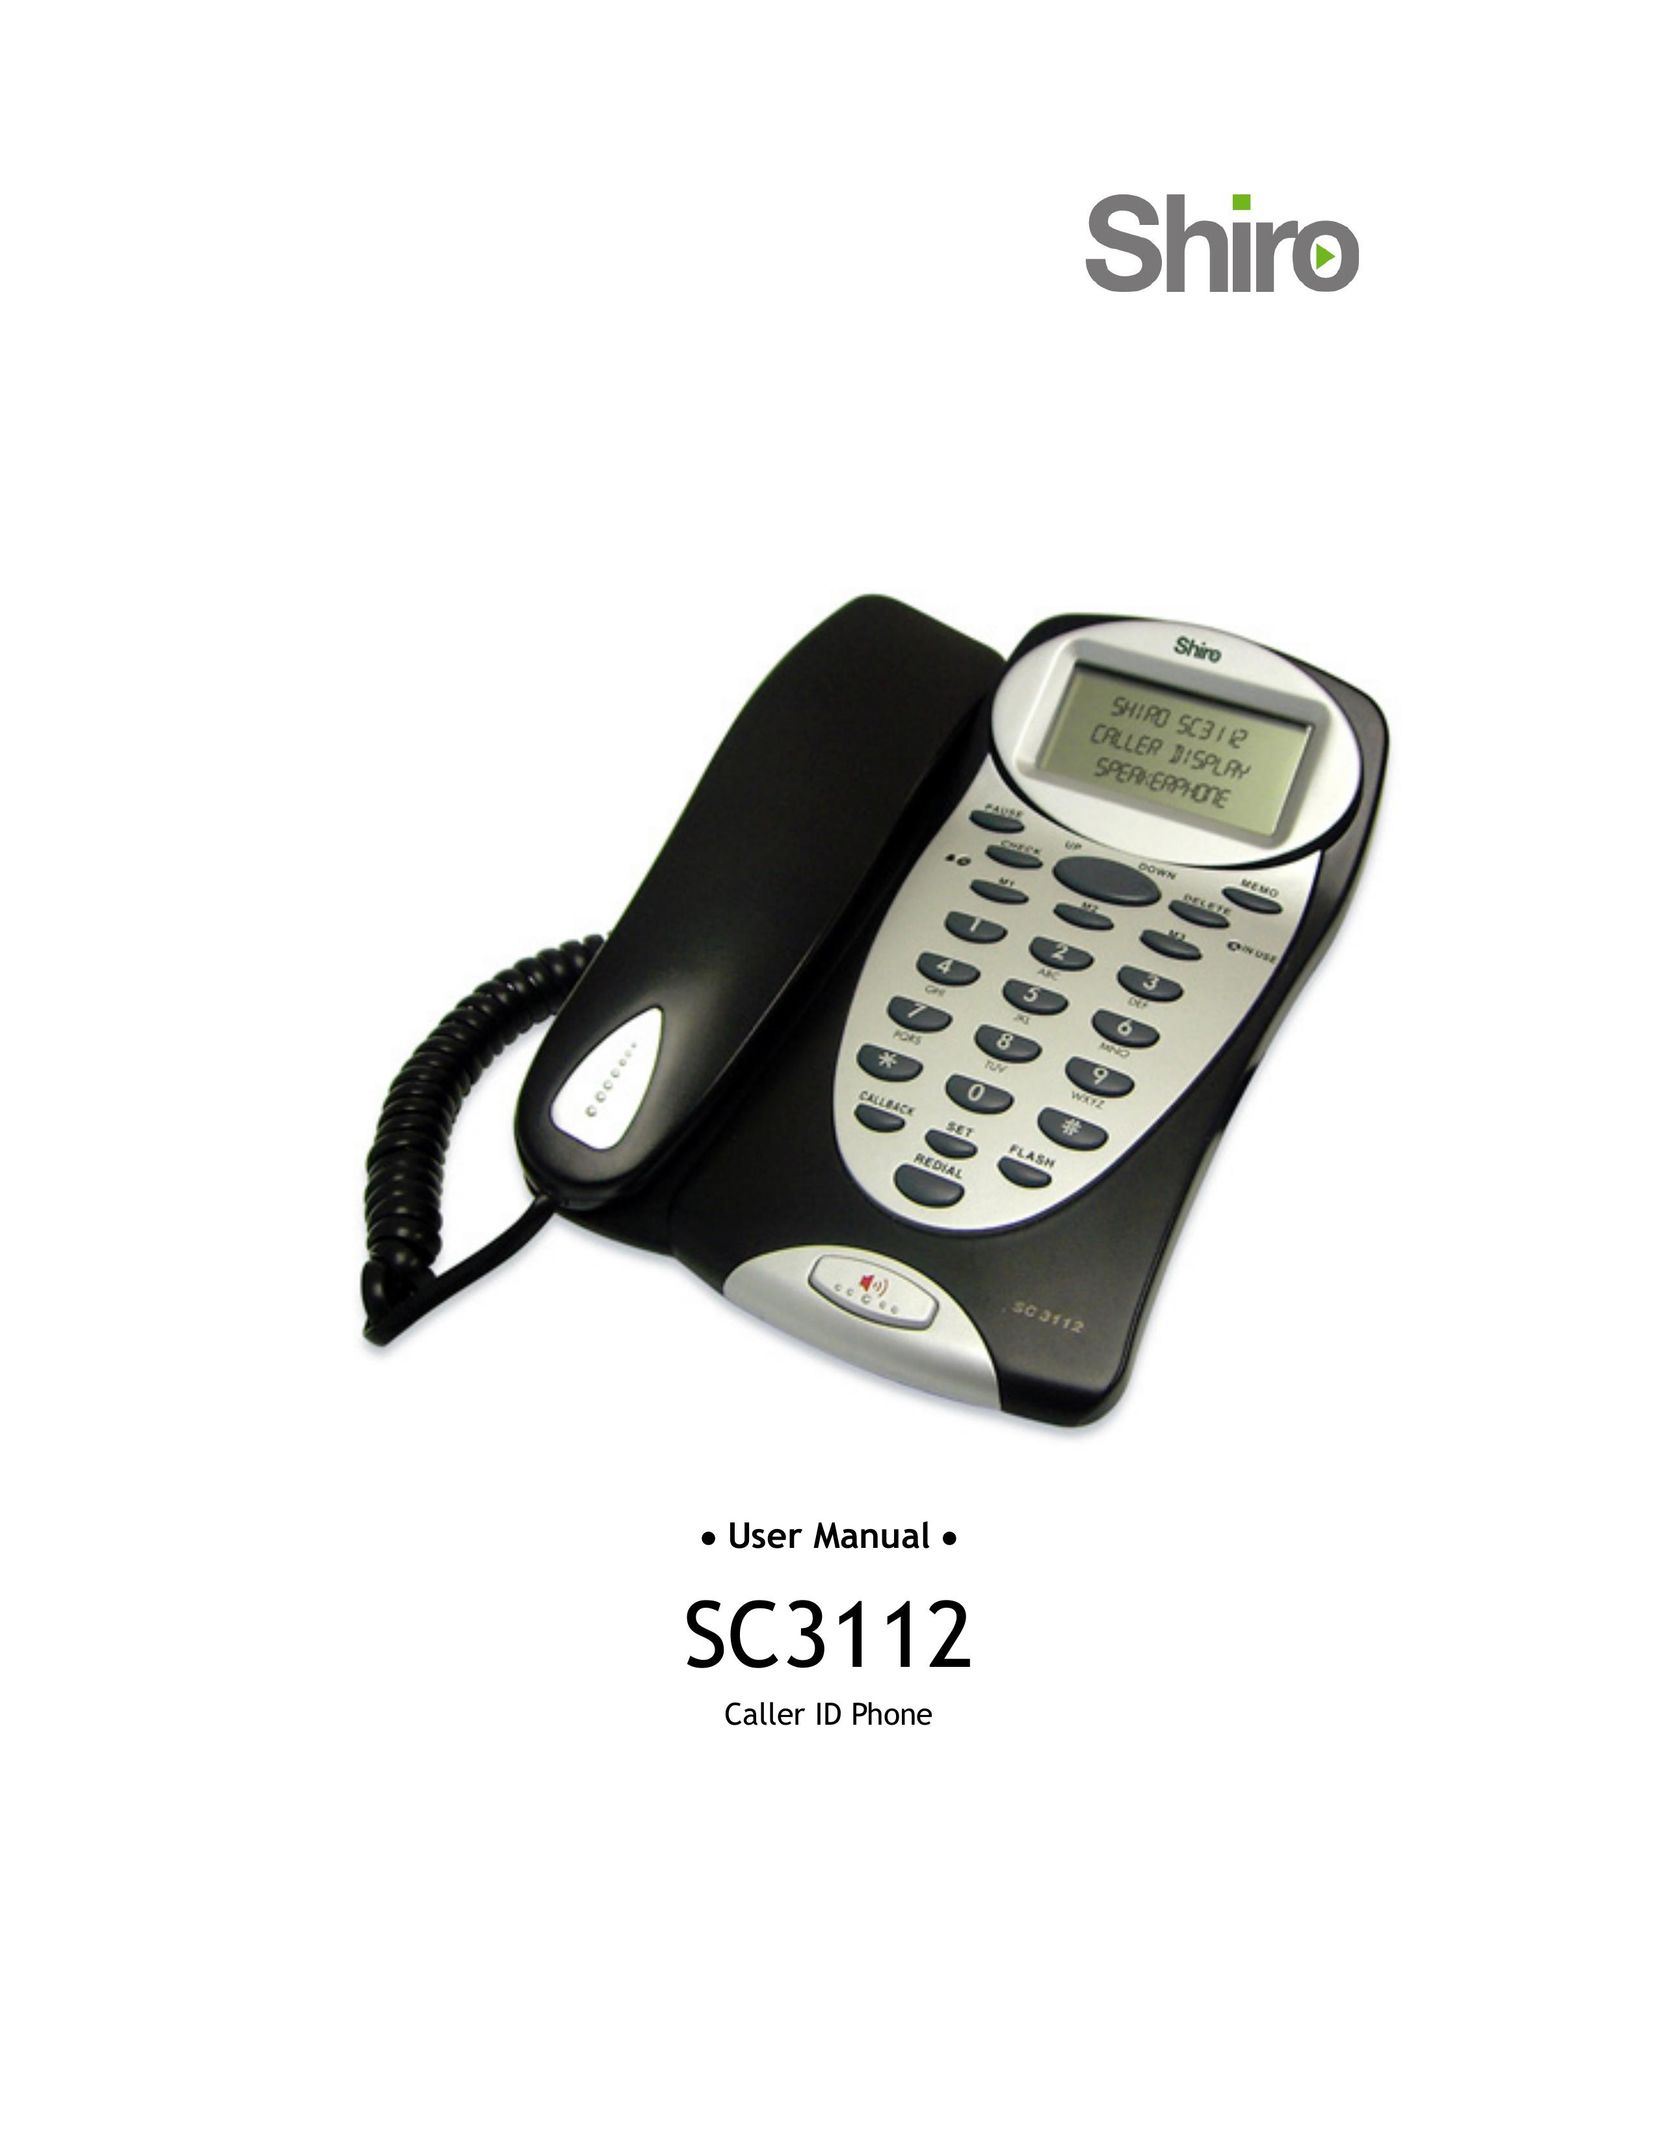 Shiro SC3112 Telephone User Manual